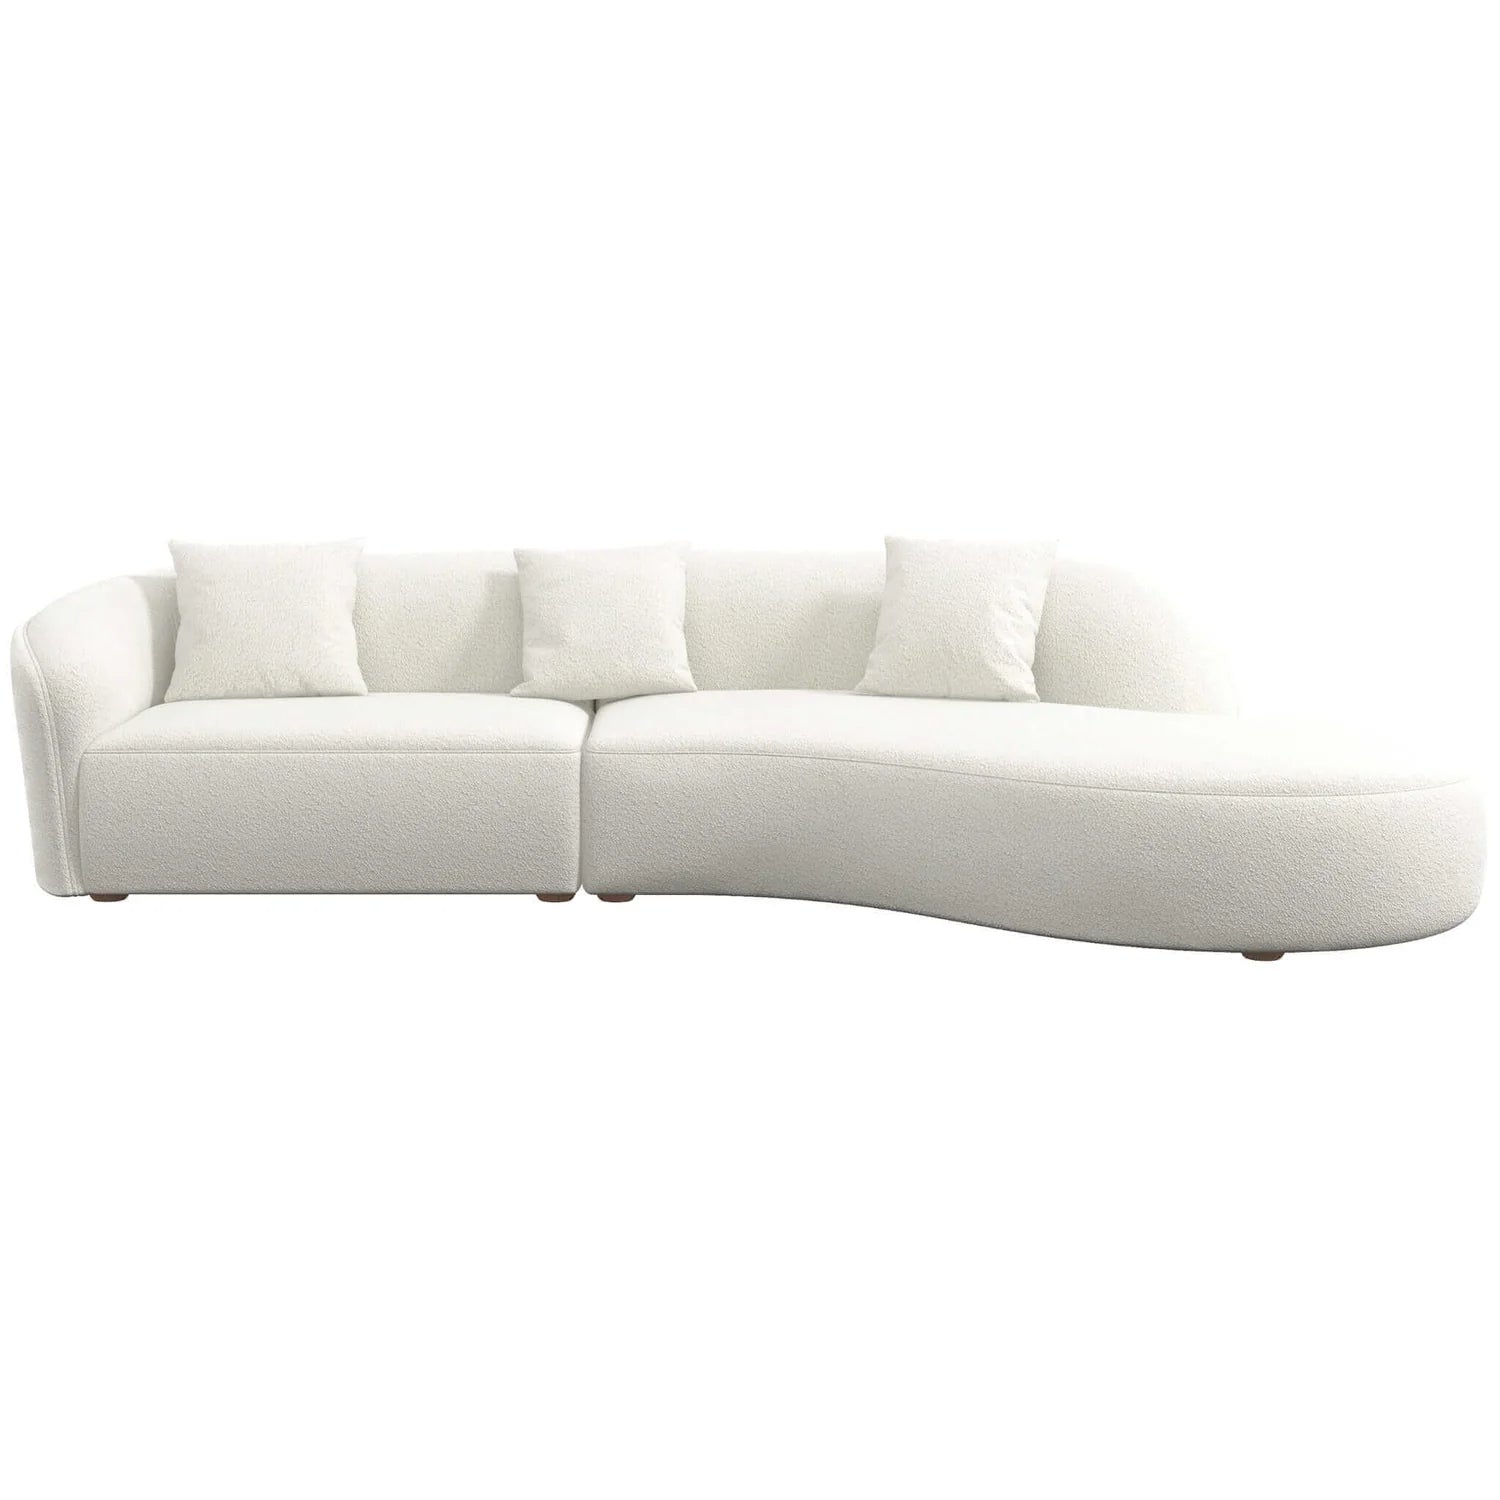 Elijah Japandi Style Curvy Sectional Sofa White